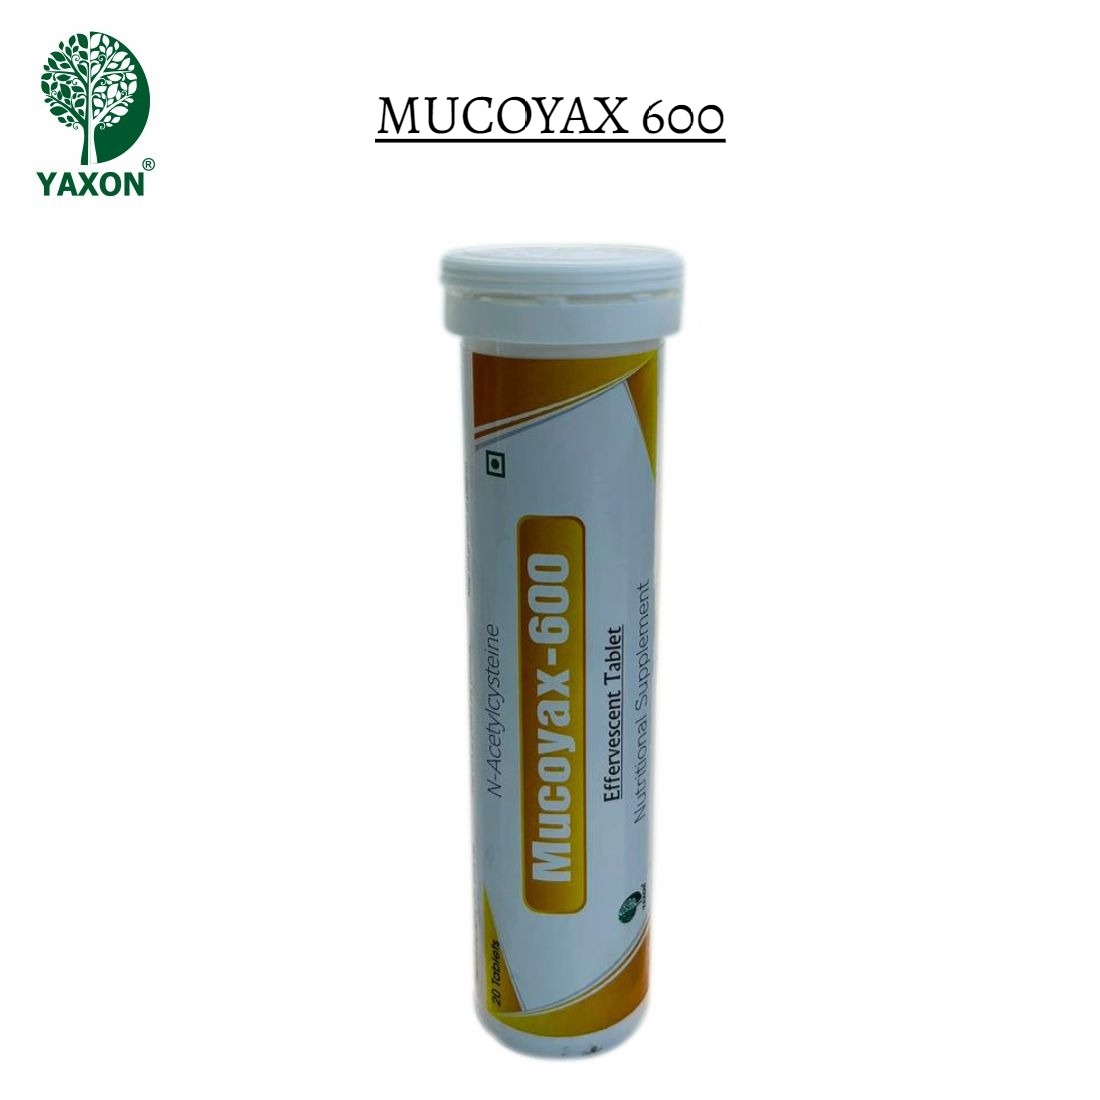 YAXON Mucoyax 600 Effervescent Tablets